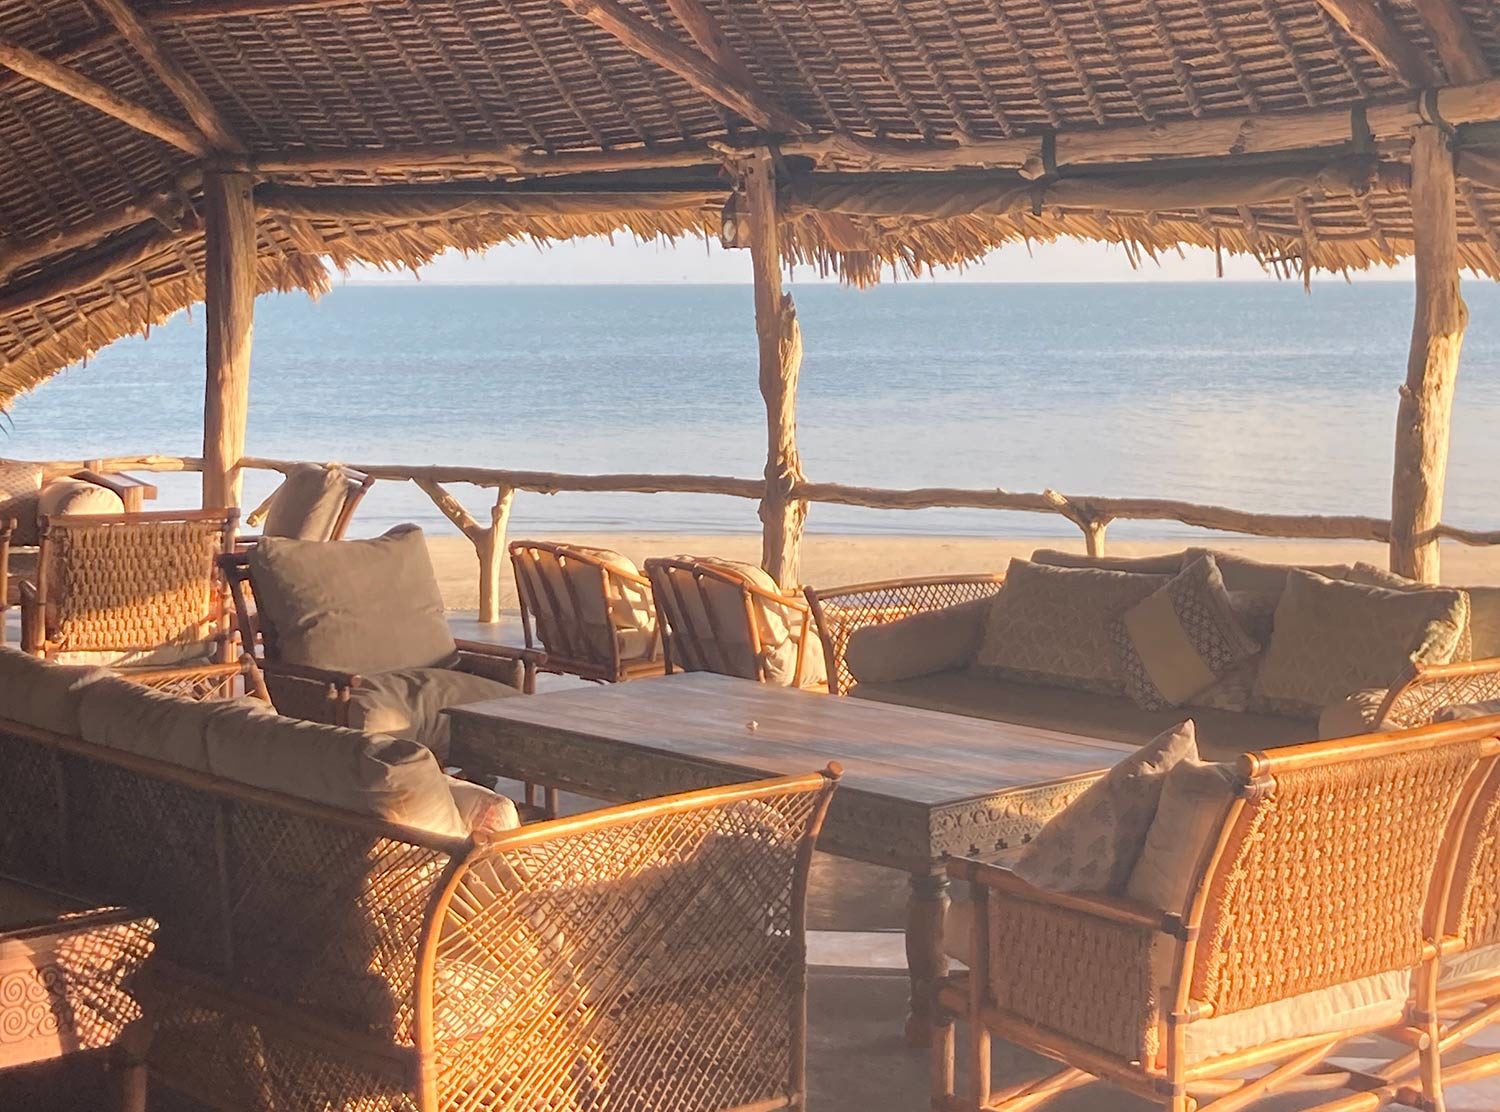 Manda Bay Resort Sundowners on the terrace